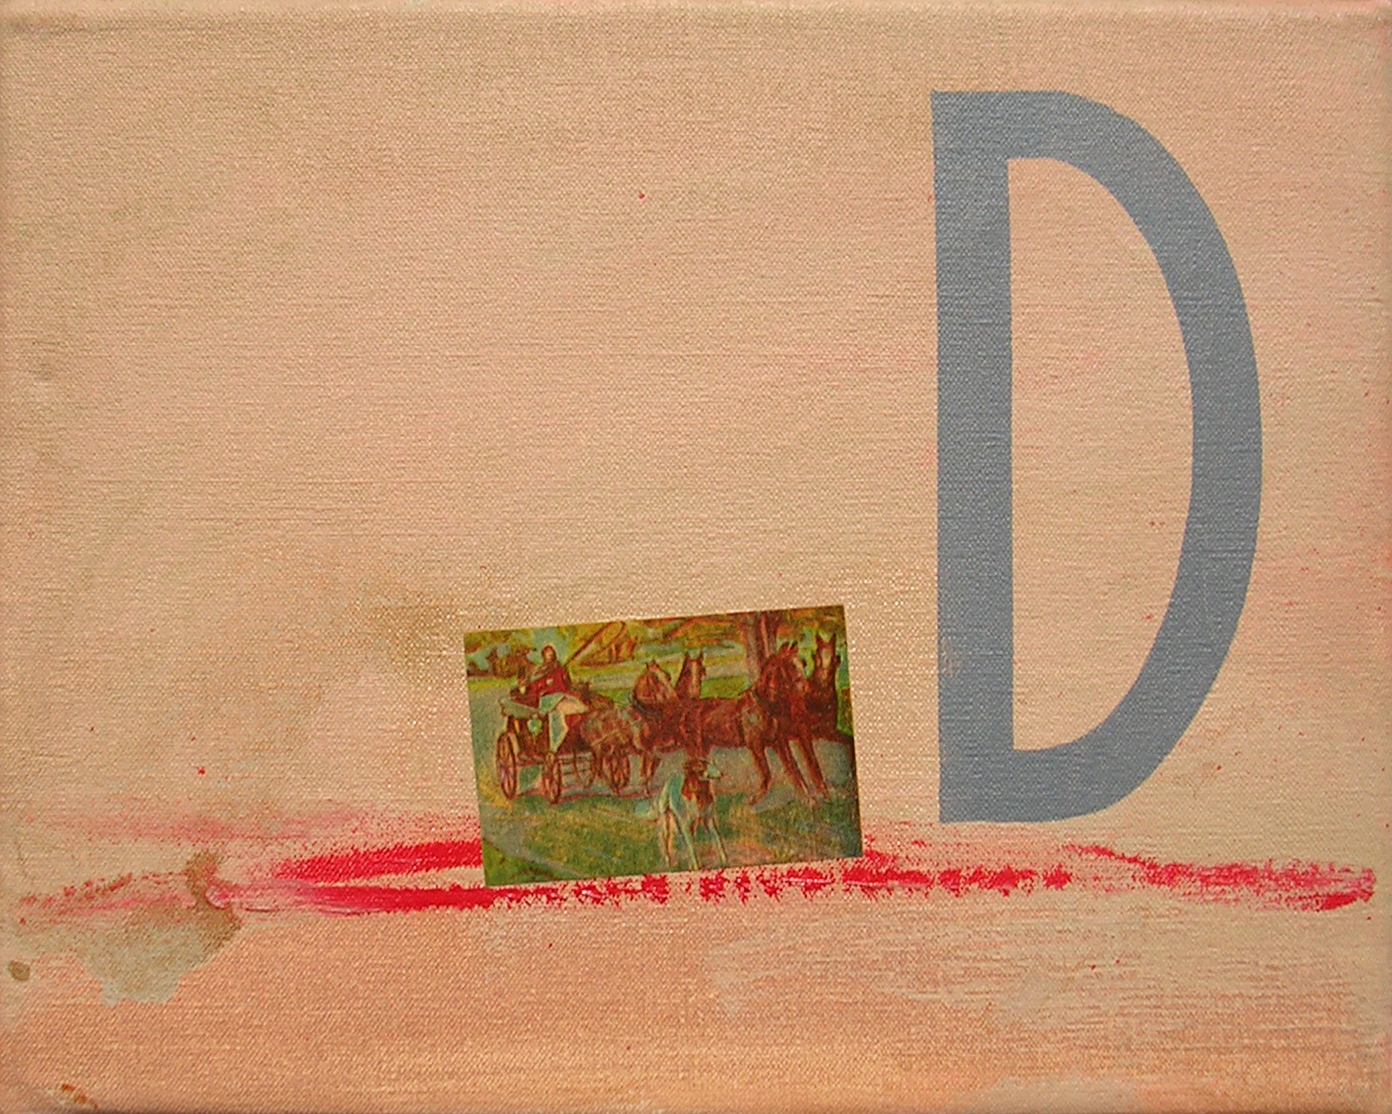 Abecedario D; objetos ensamblados, tela, papel sobre bastidor, 30 cm x 40 cm, 2007